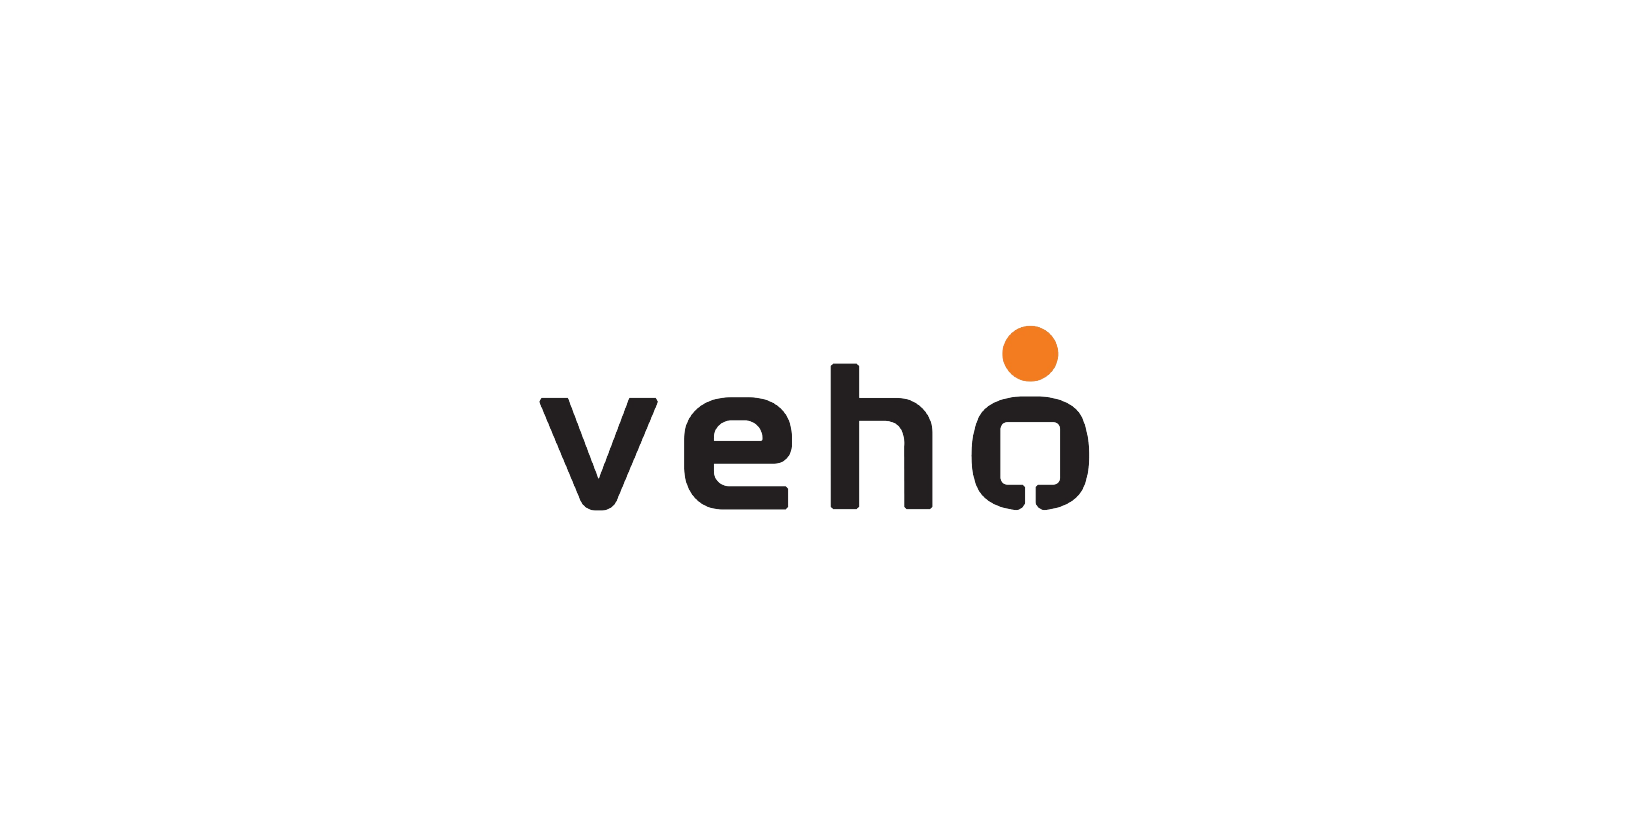 Vision Fund investment portfolio company Veho's logo